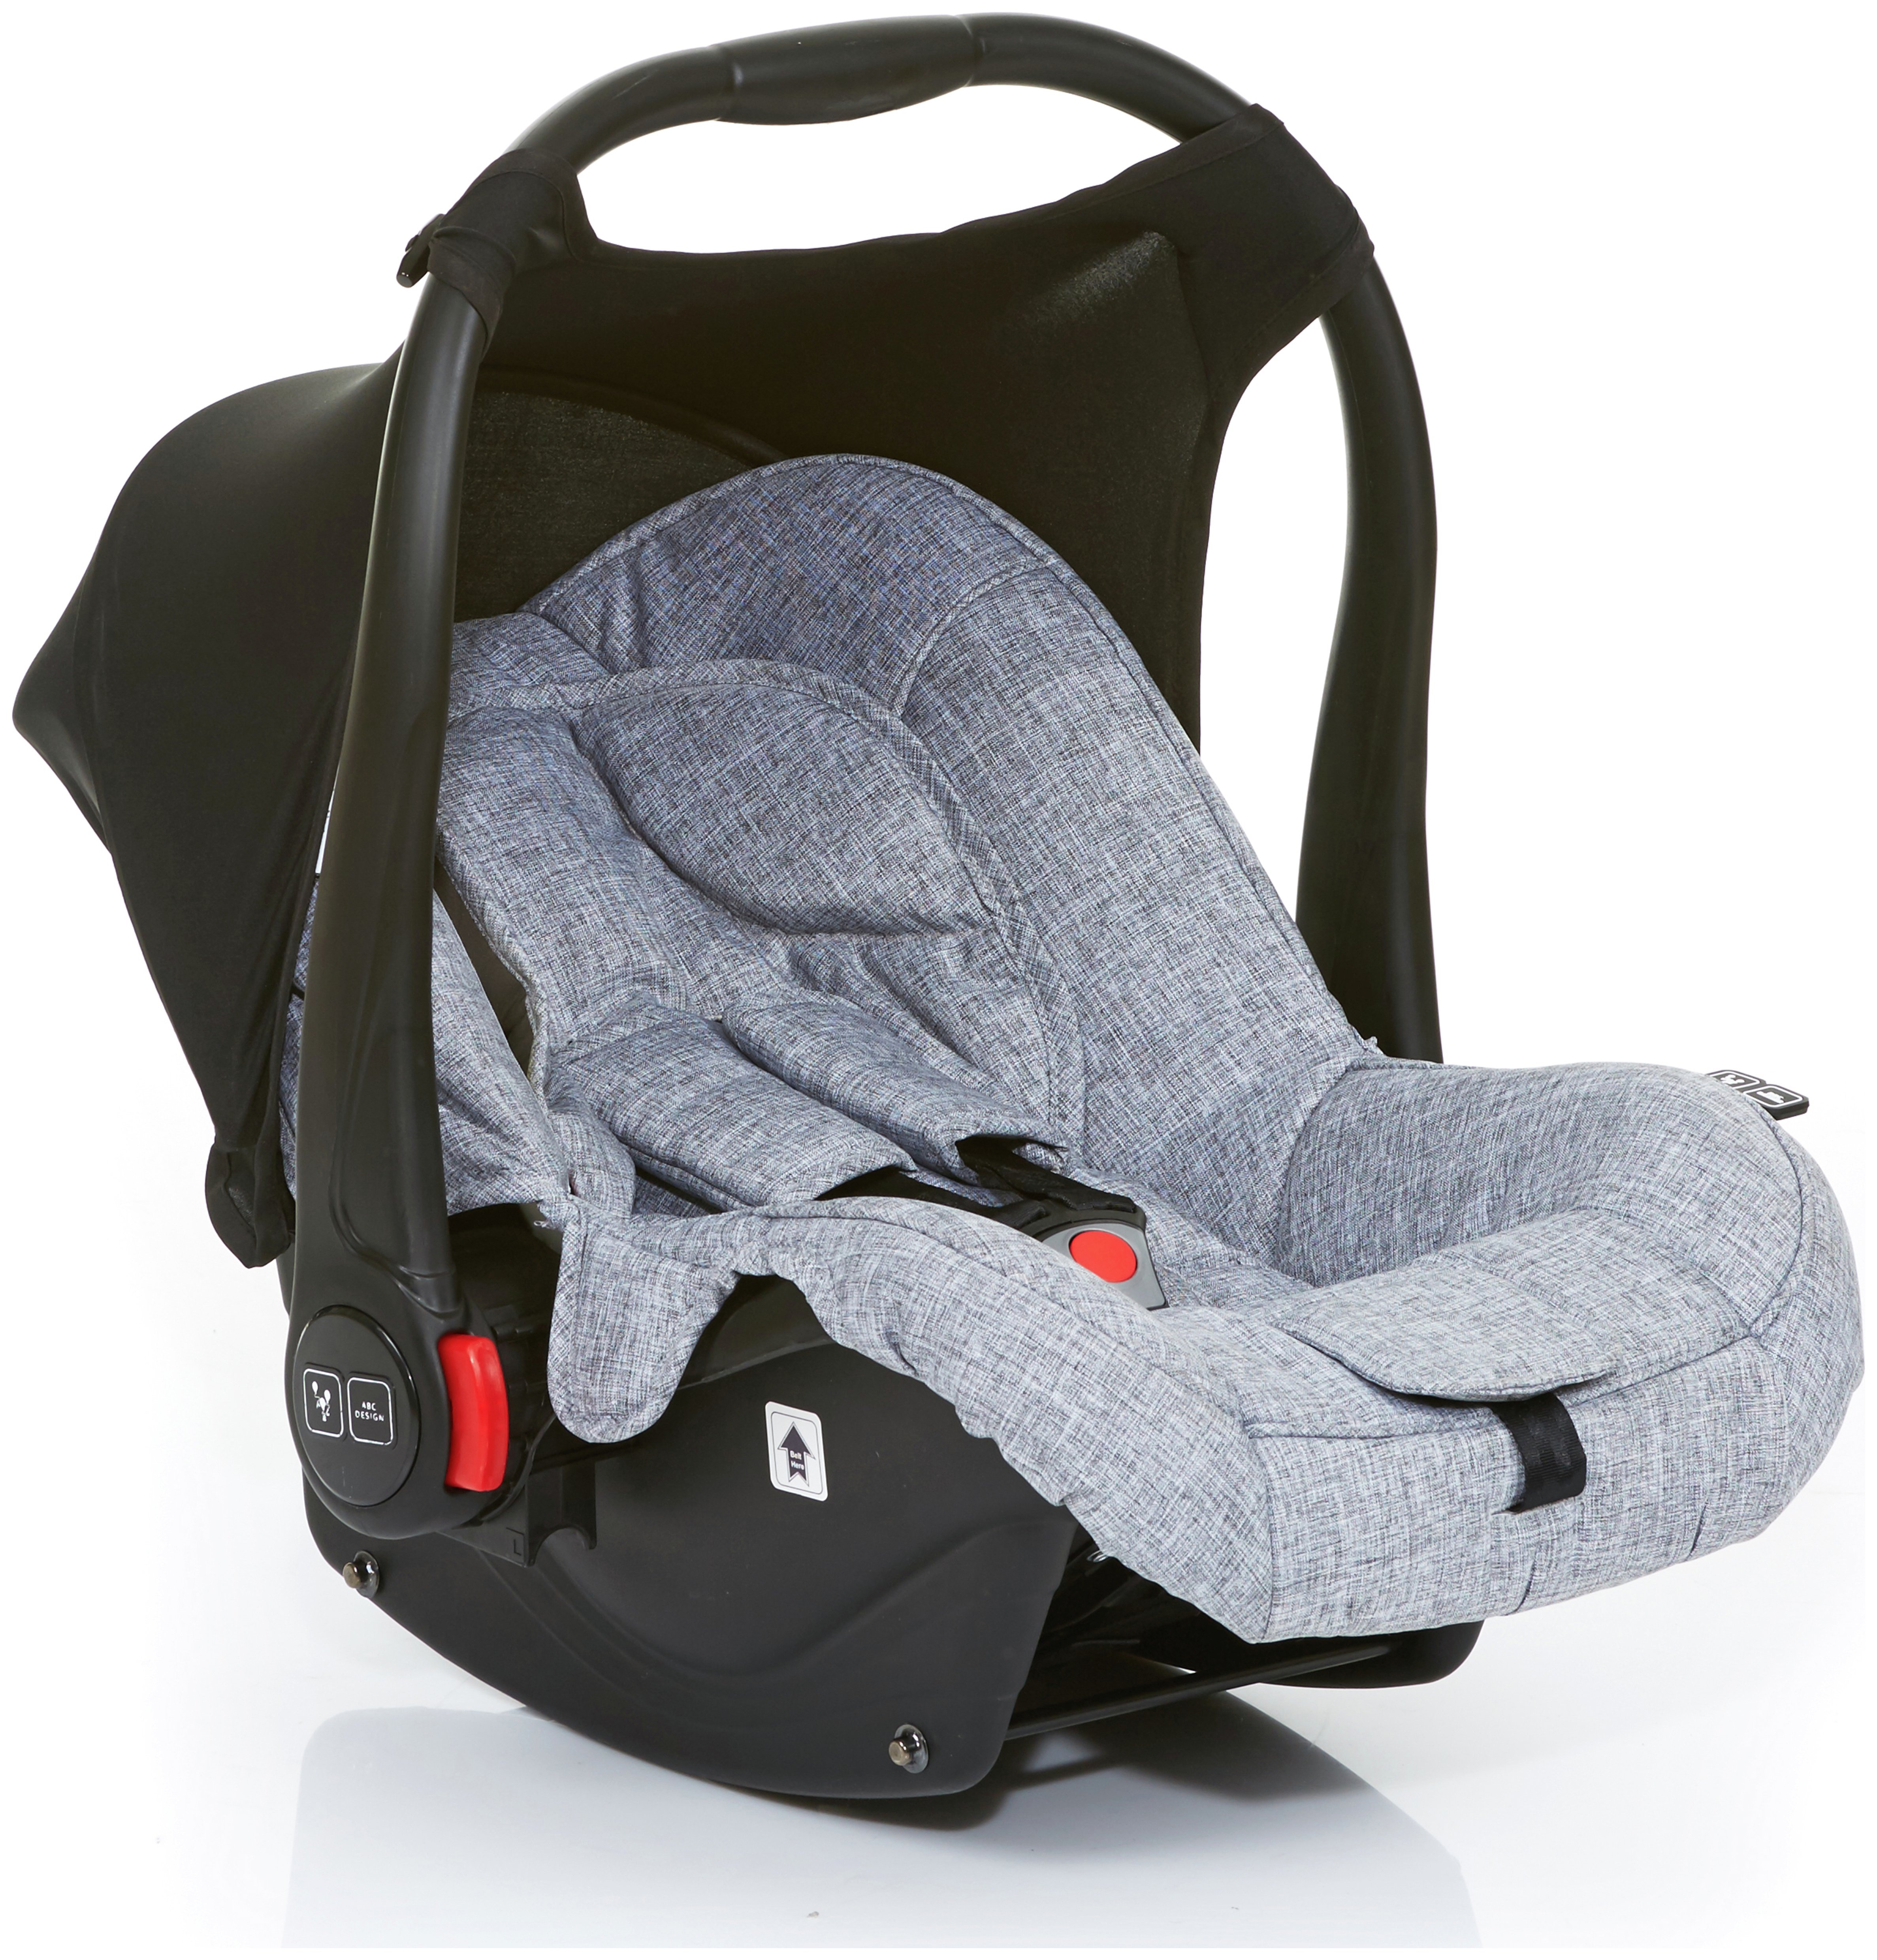 ABC Design Salsa 4 Group 0+ Infant Car Seat - Graphite Grey Review